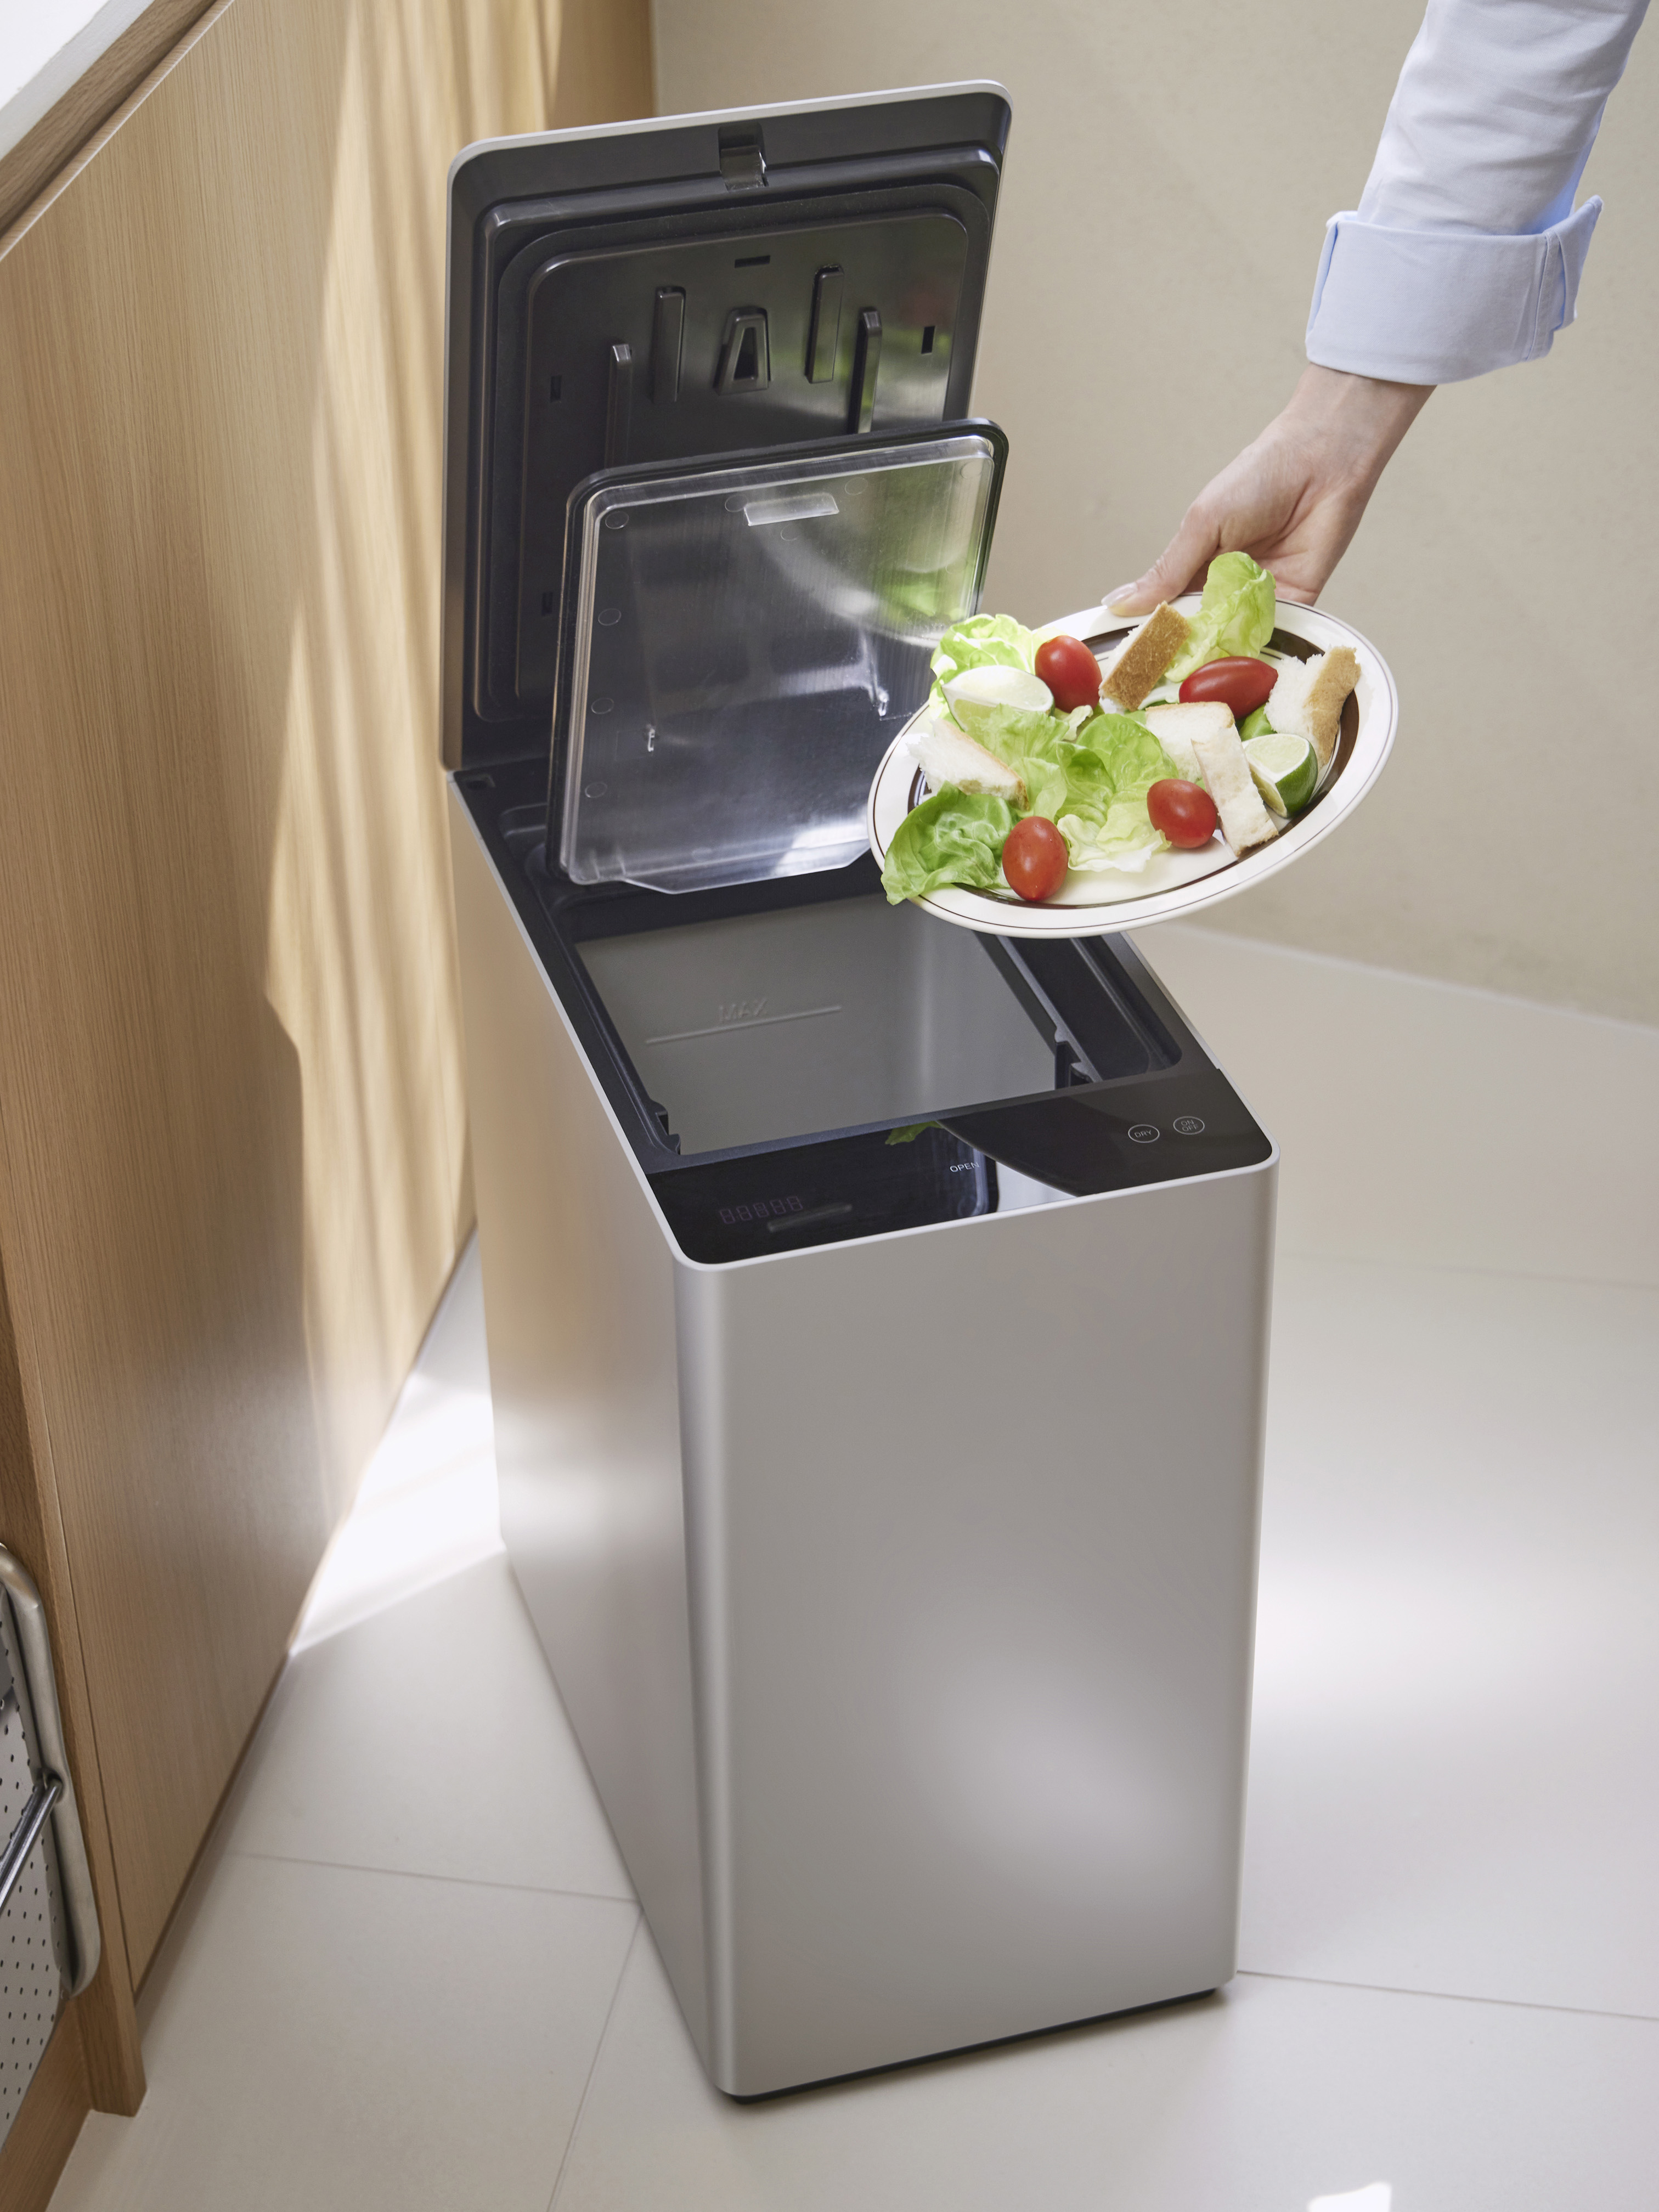 Final Kitchen - Home Appliance Reduce Food Waste